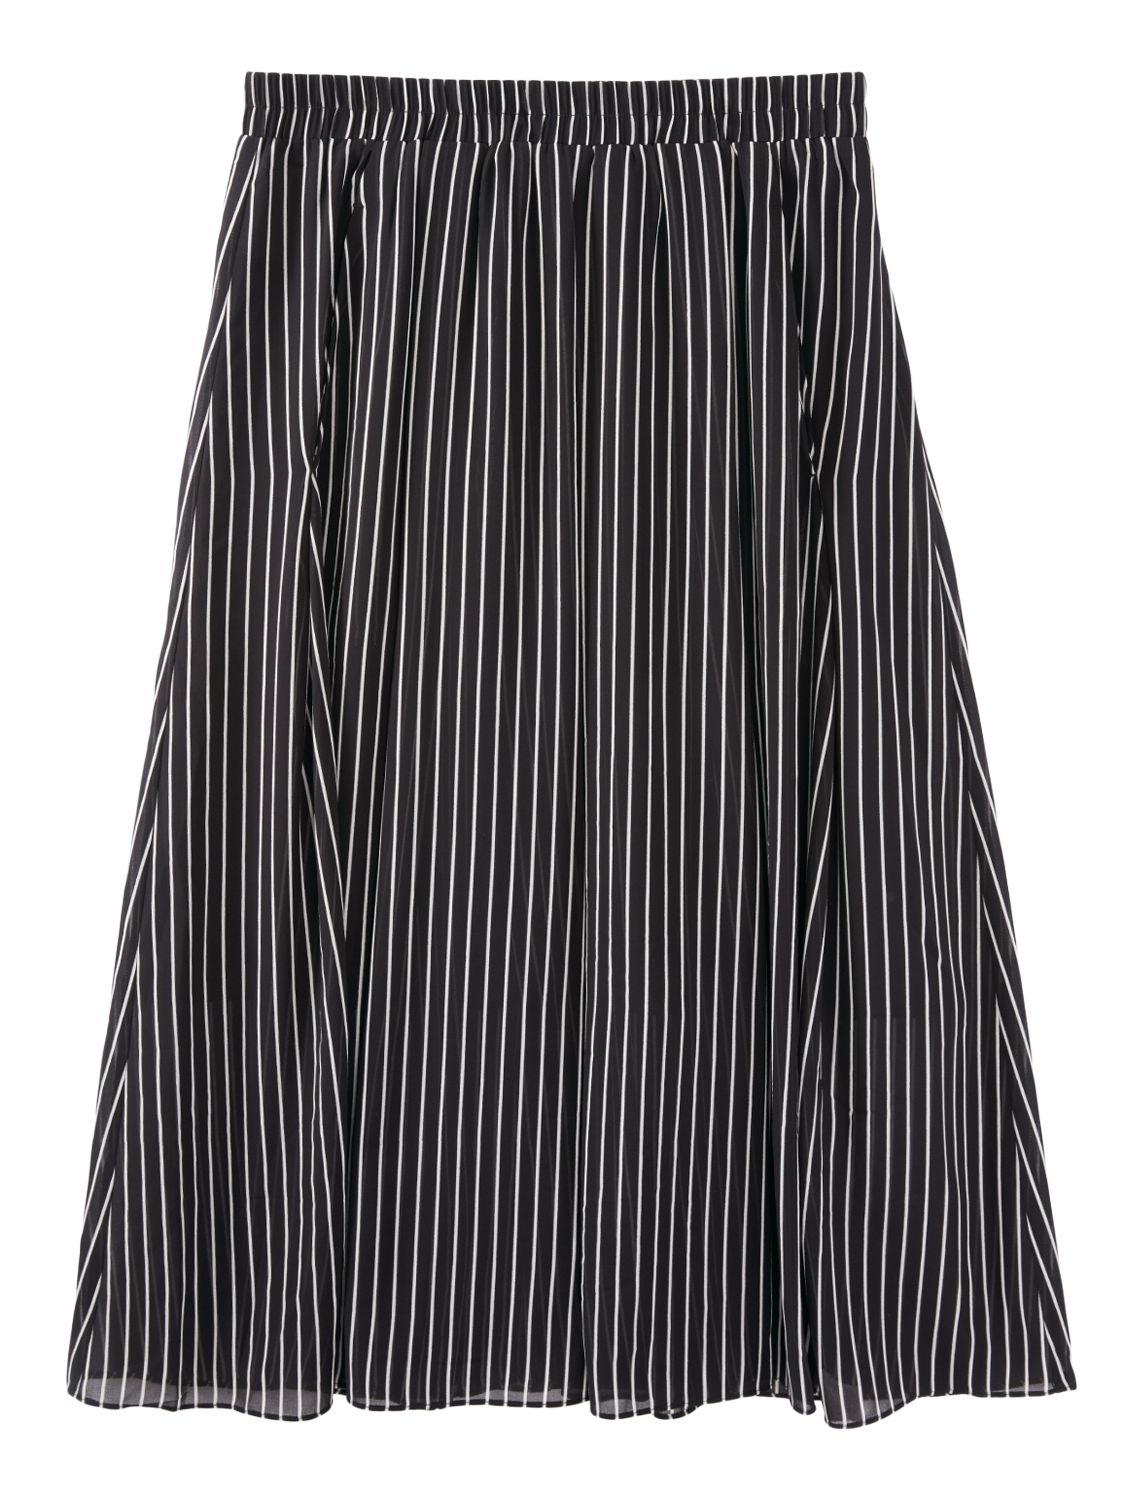 hush Marina Striped Skirt at John Lewis & Partners